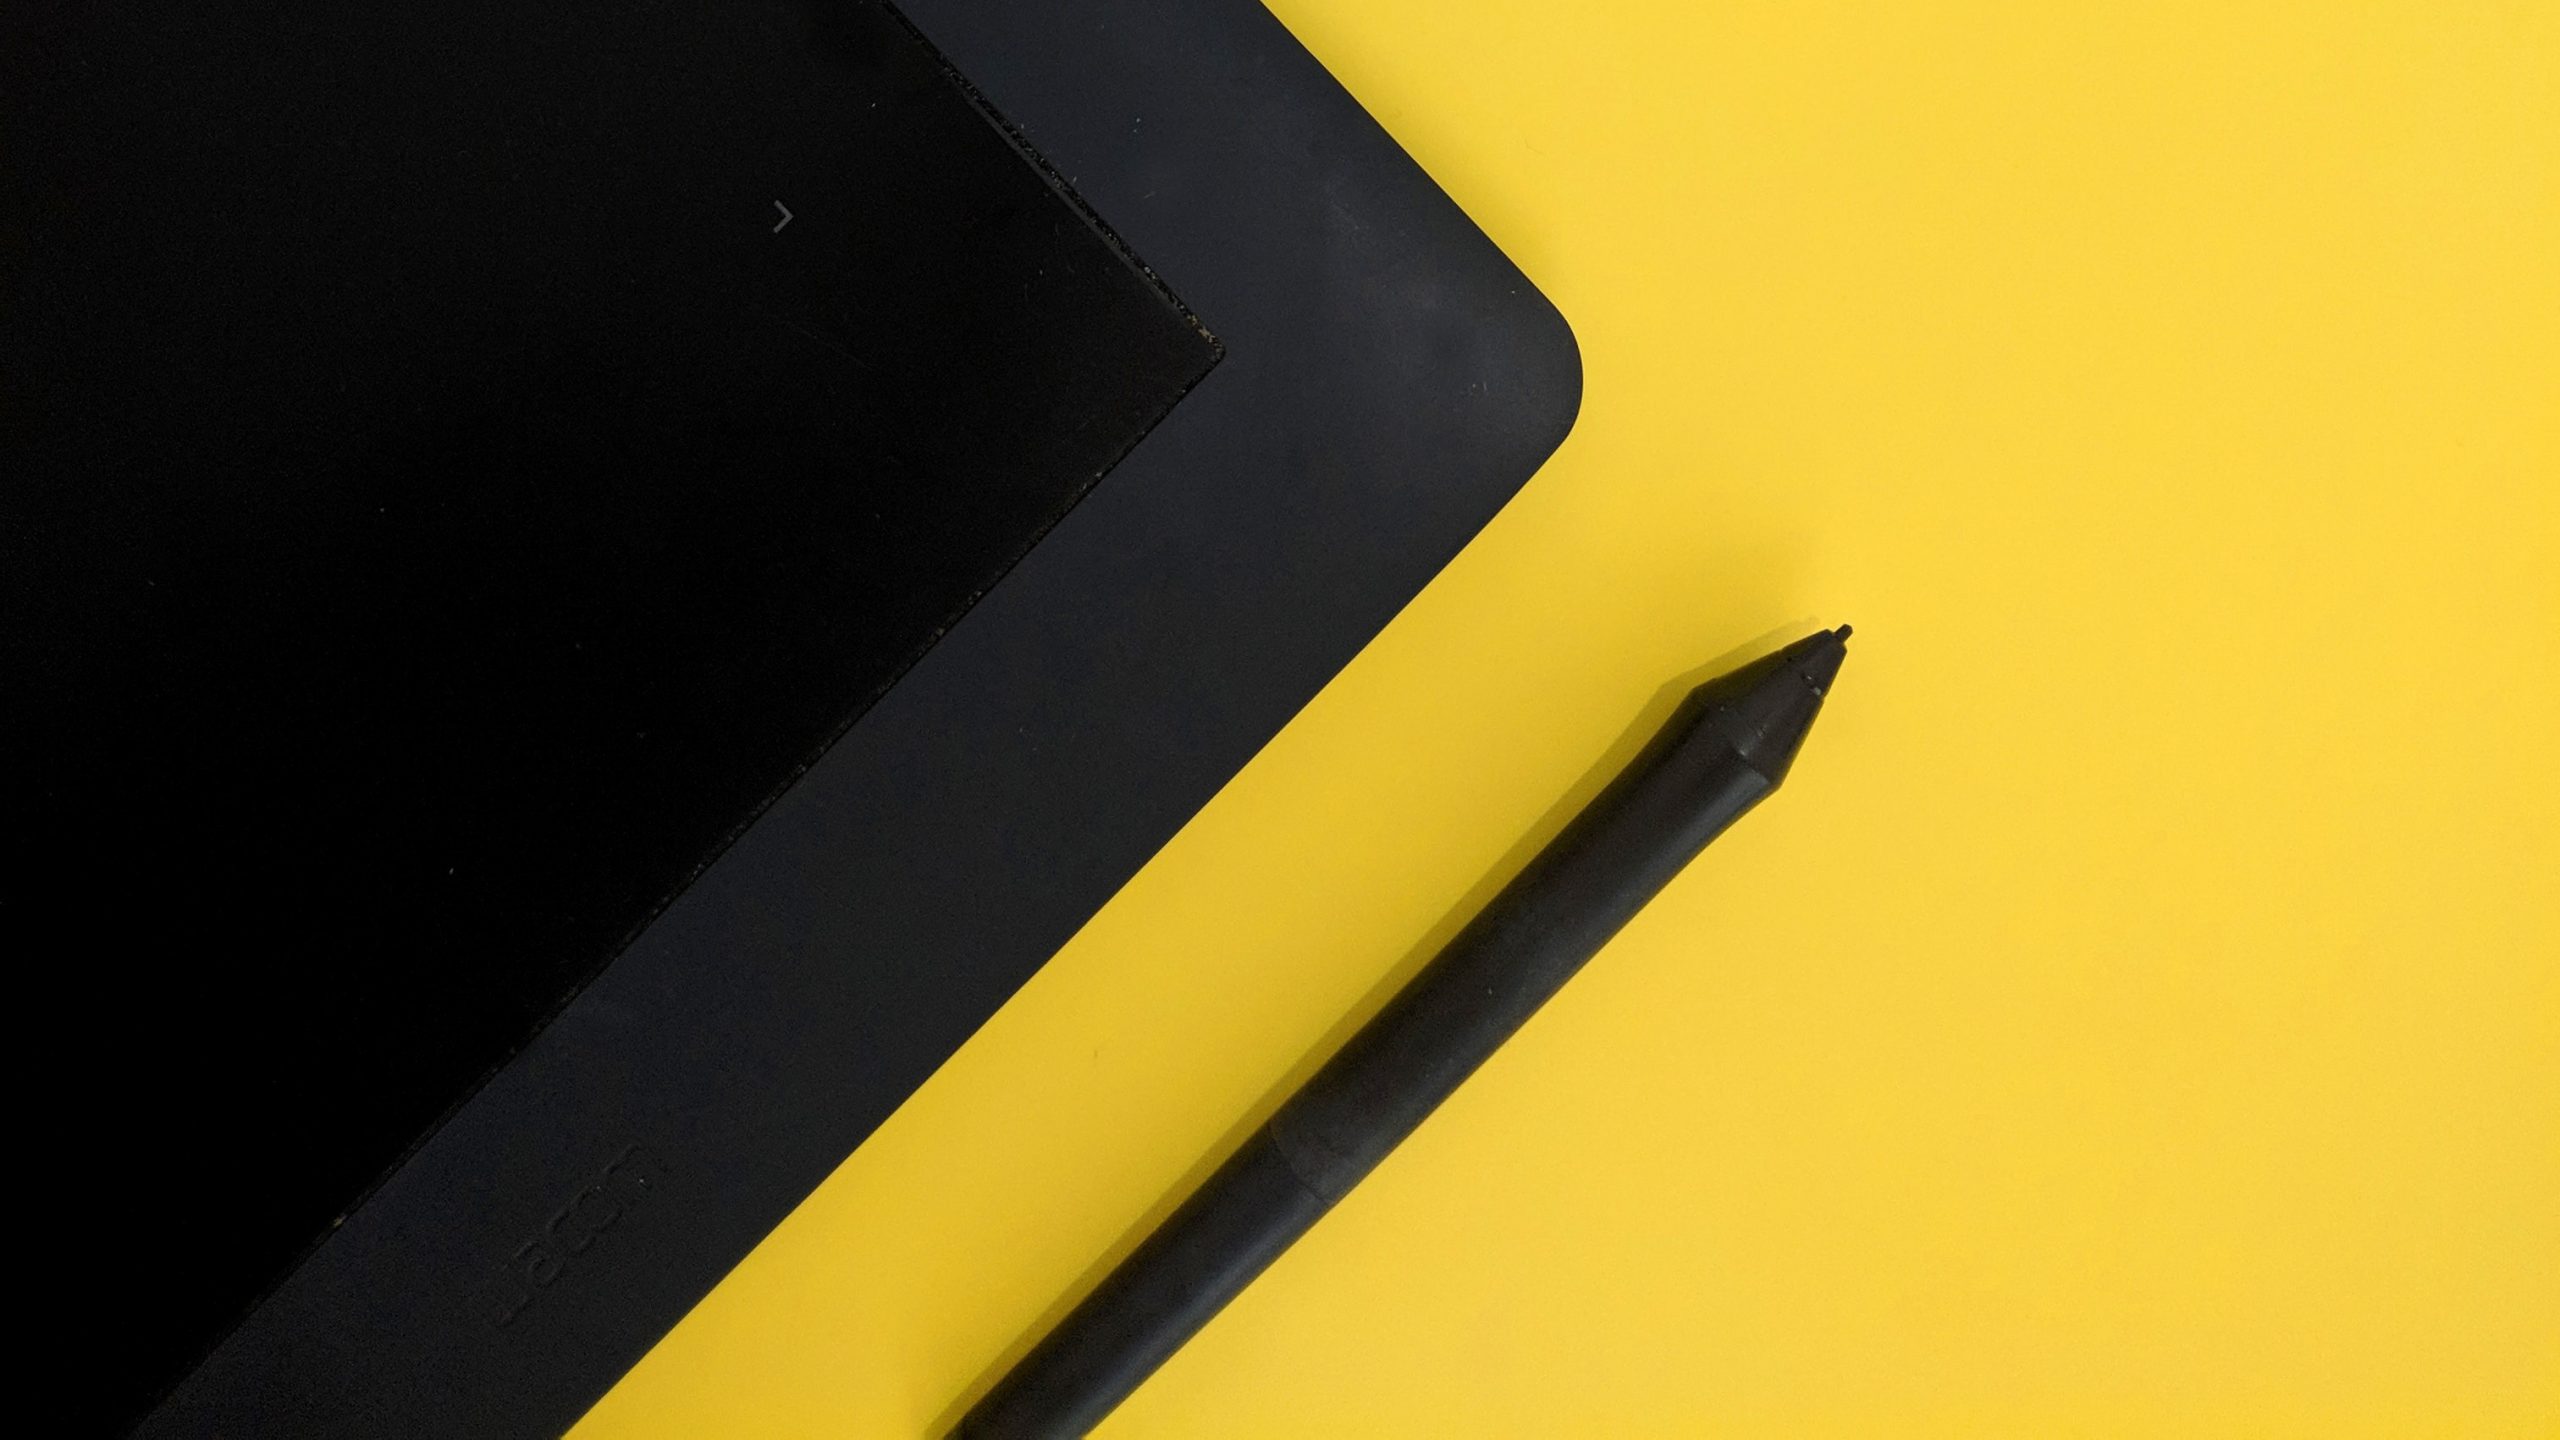 ipad black stylus in yellow background